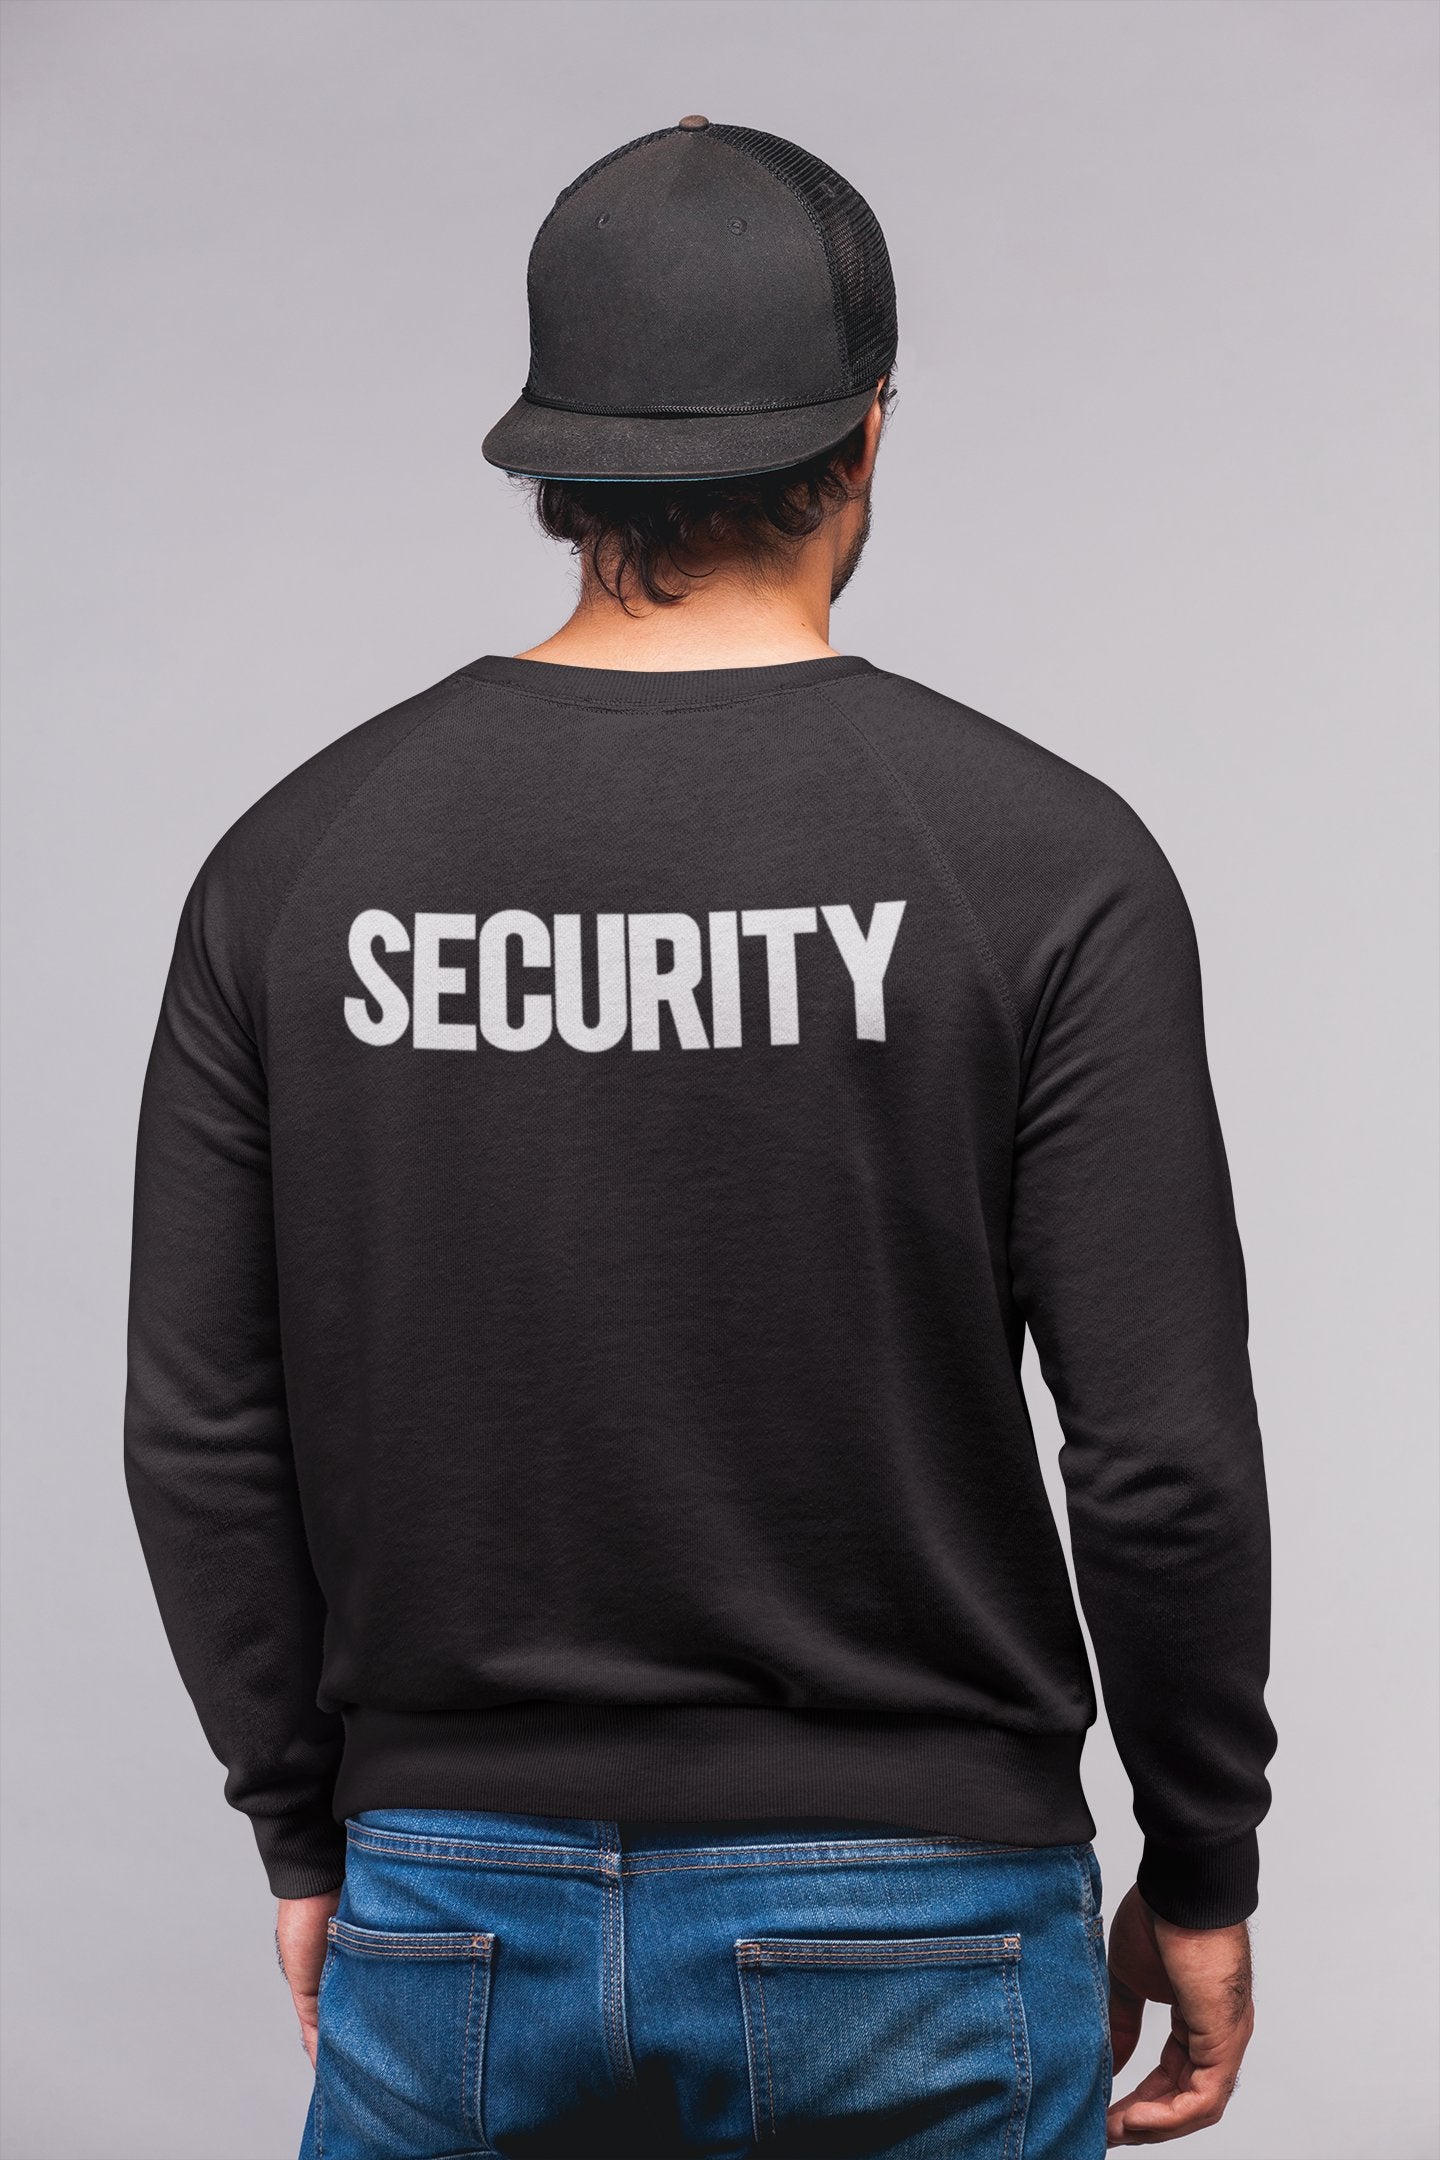 Title: Men's Security Sweatshirt Soft Fleece Crewneck (Black/White)